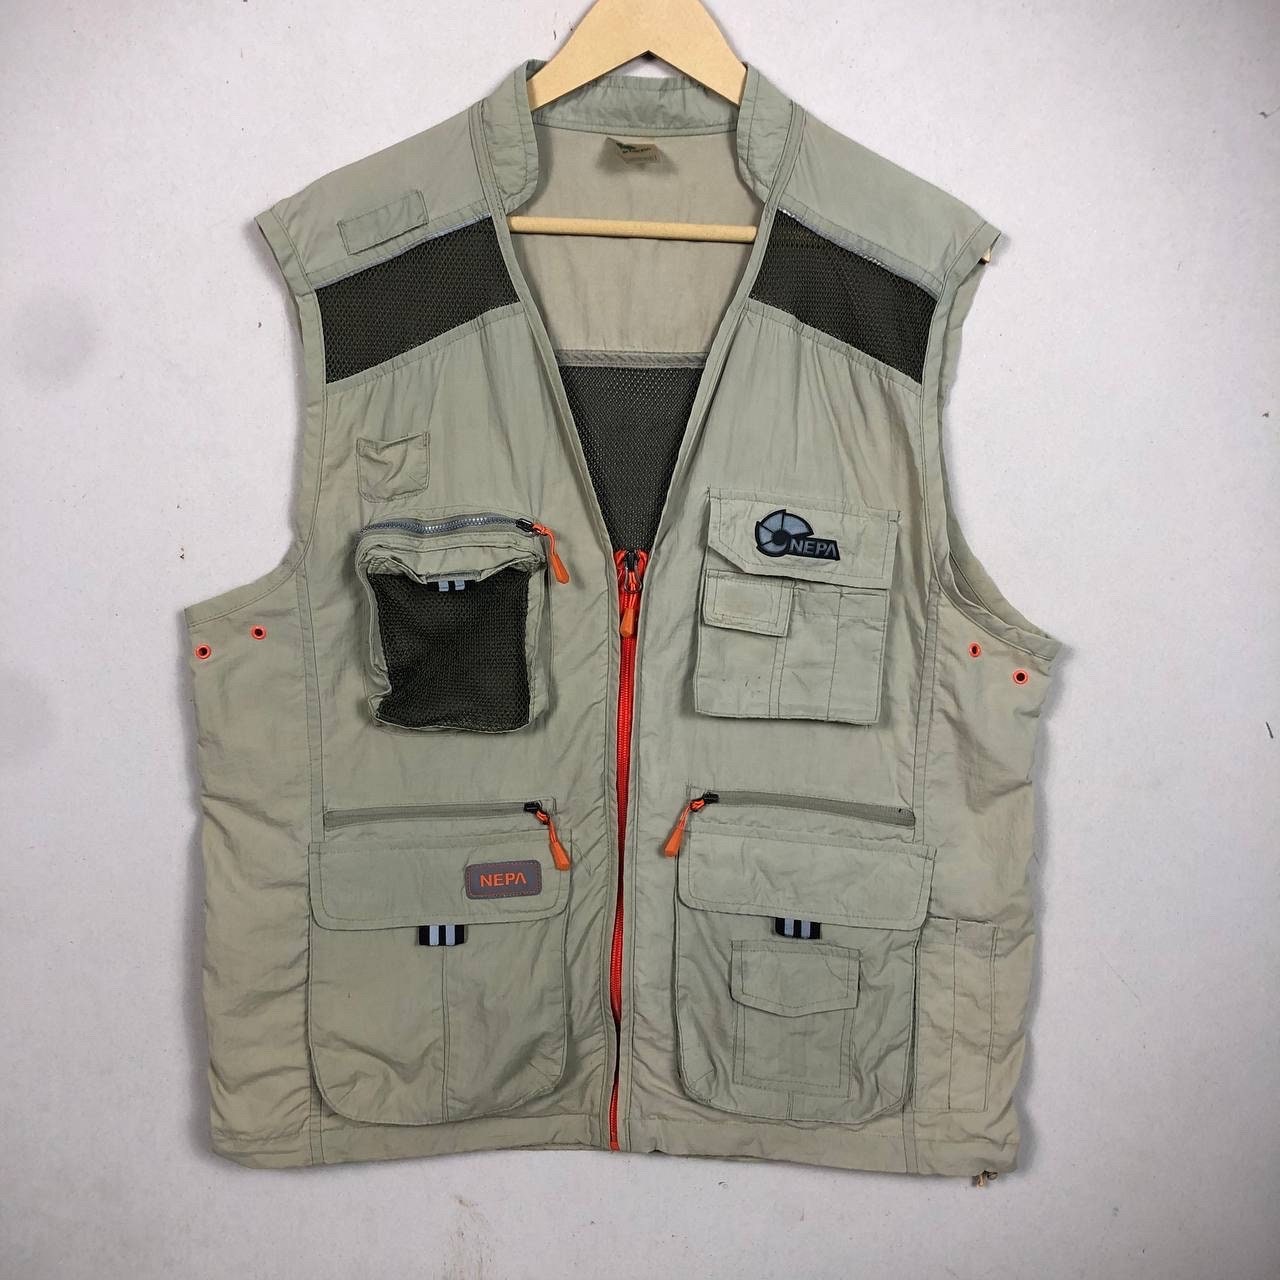 Vintage 90s Avant Garde Nepa Outdoor Tactical Utility Vest Multi Pocket Fishing Gear Jacket Army Style